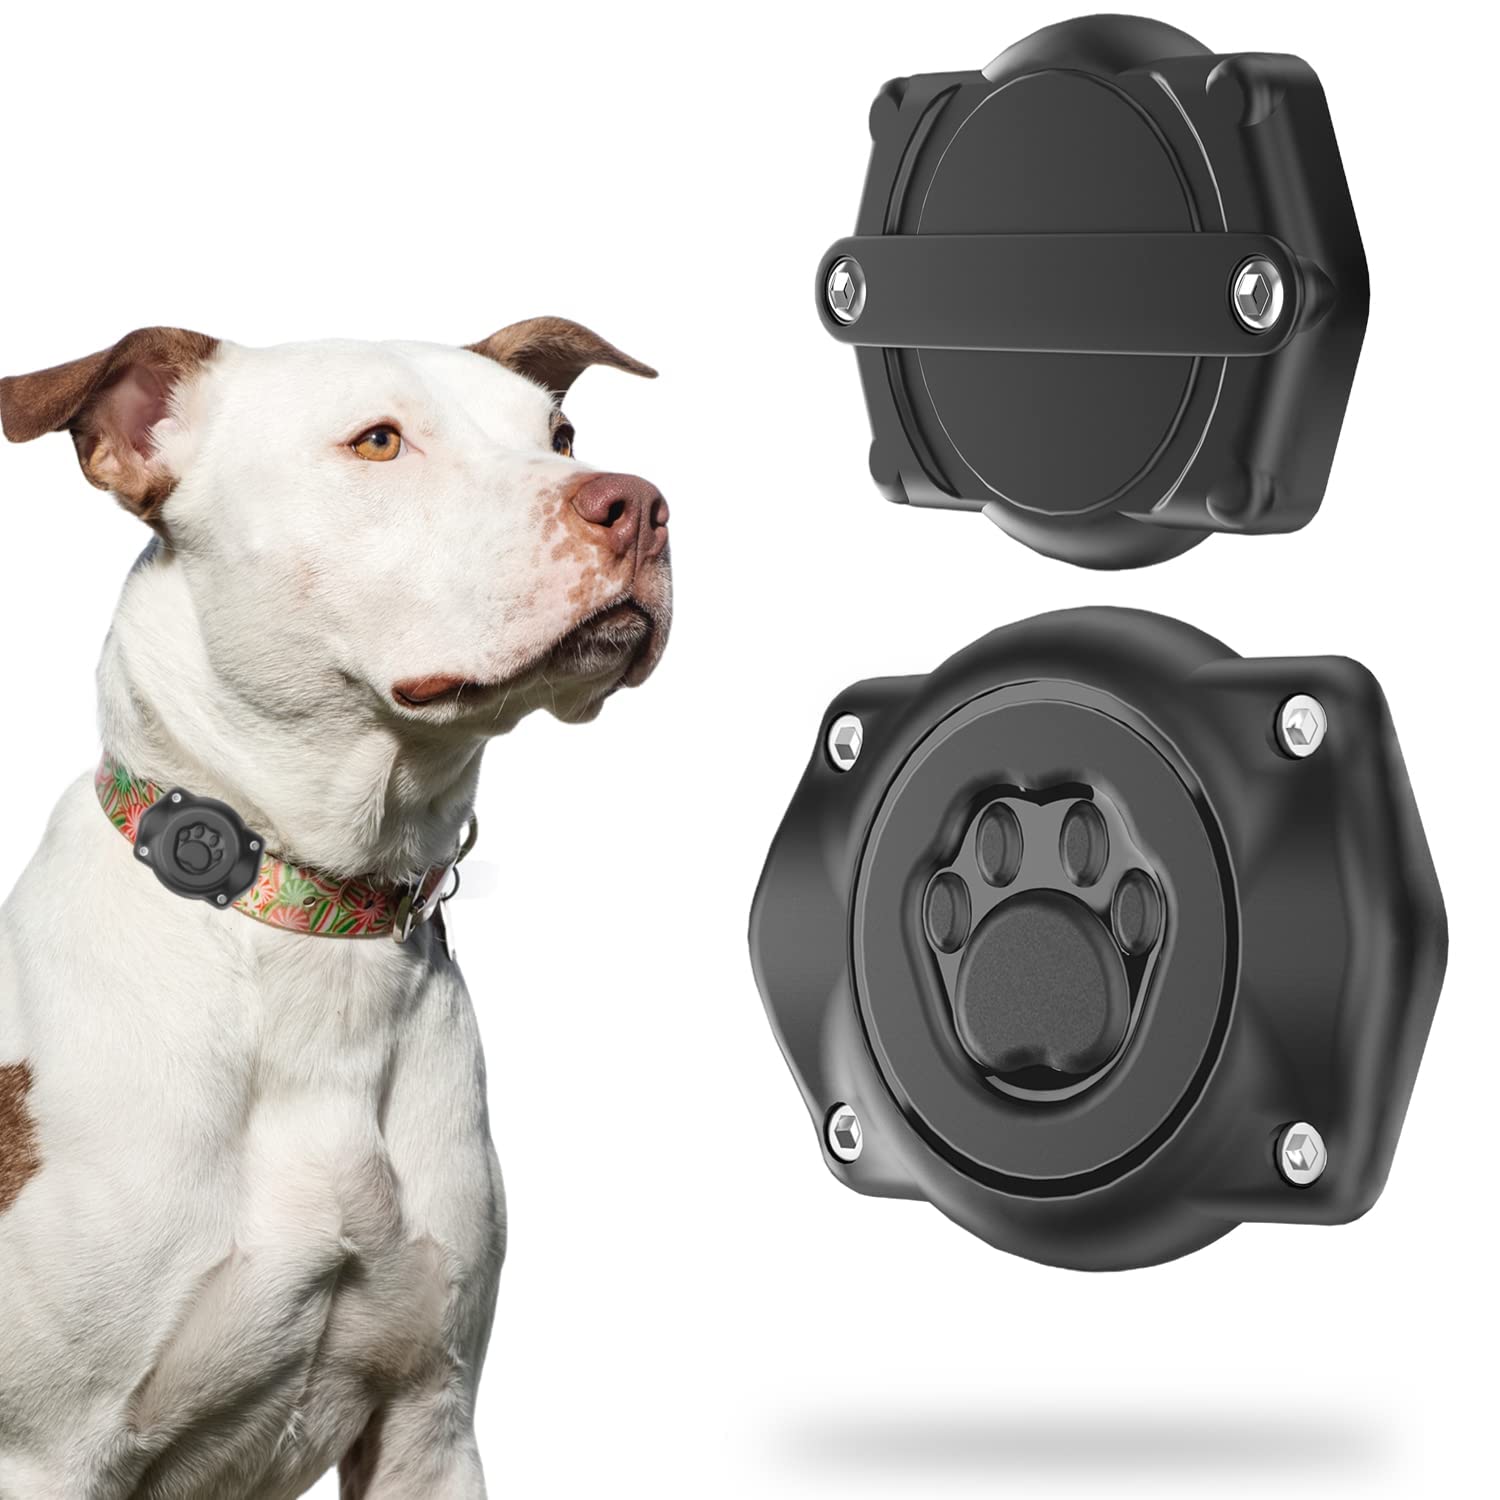 Airtag Dog Collar Holder   - $10.90 after $2 coupon - Amazon